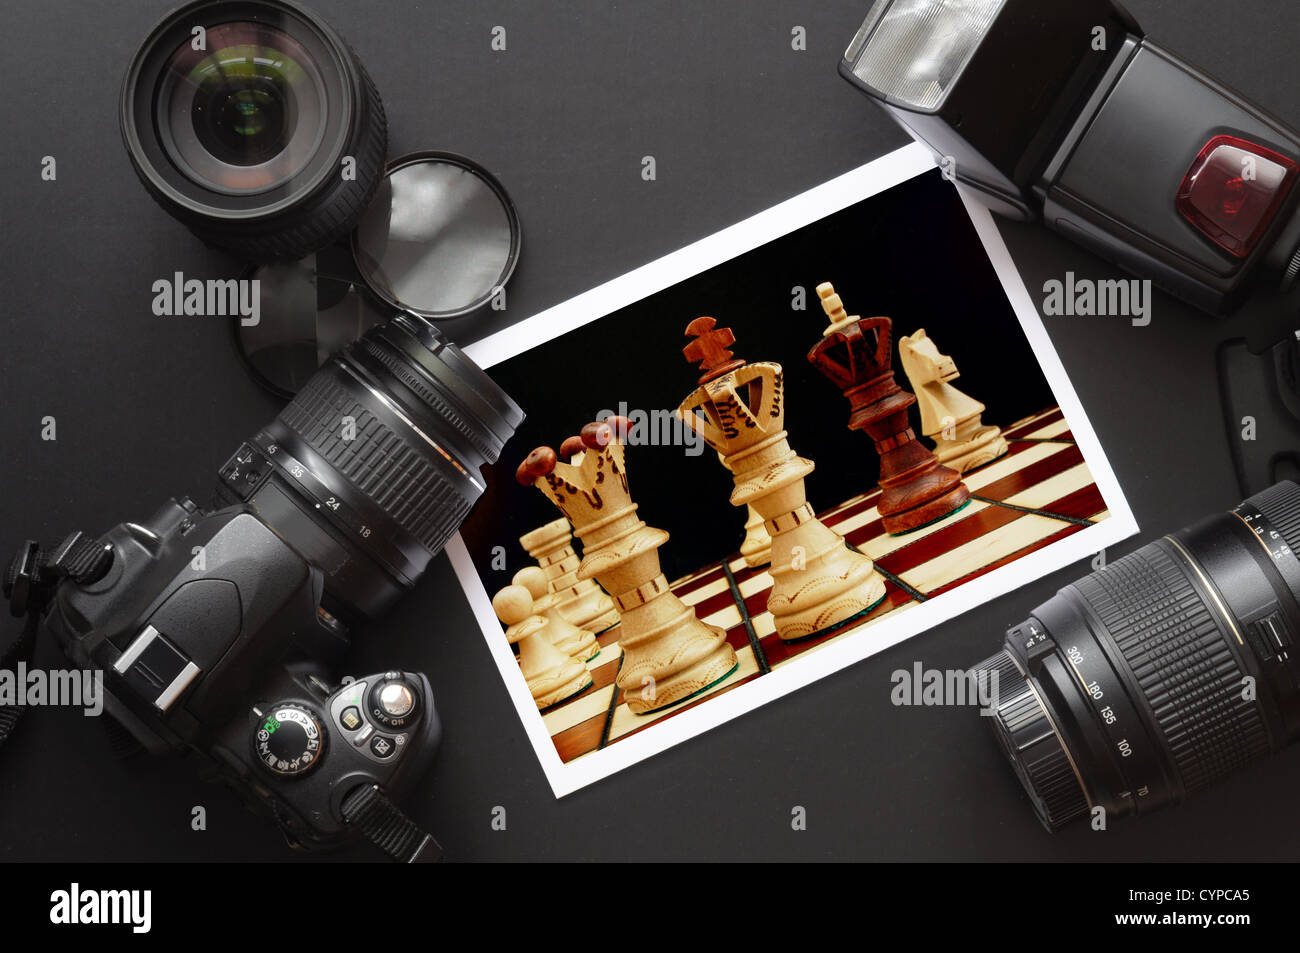 photography equipment like dslr camera  and image Stock Photo